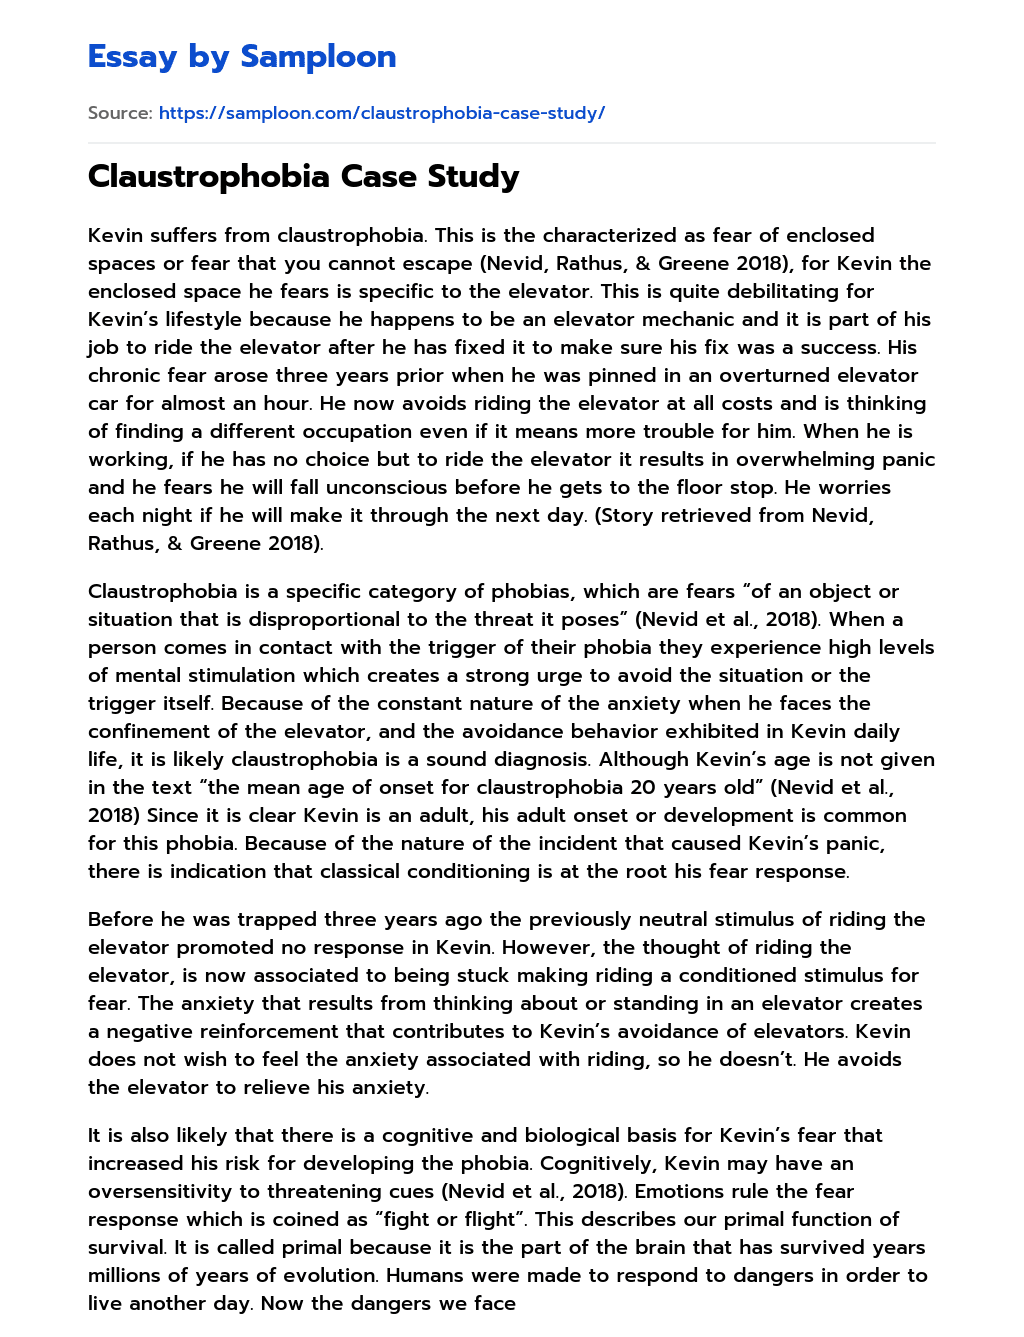 Claustrophobia Case Study essay